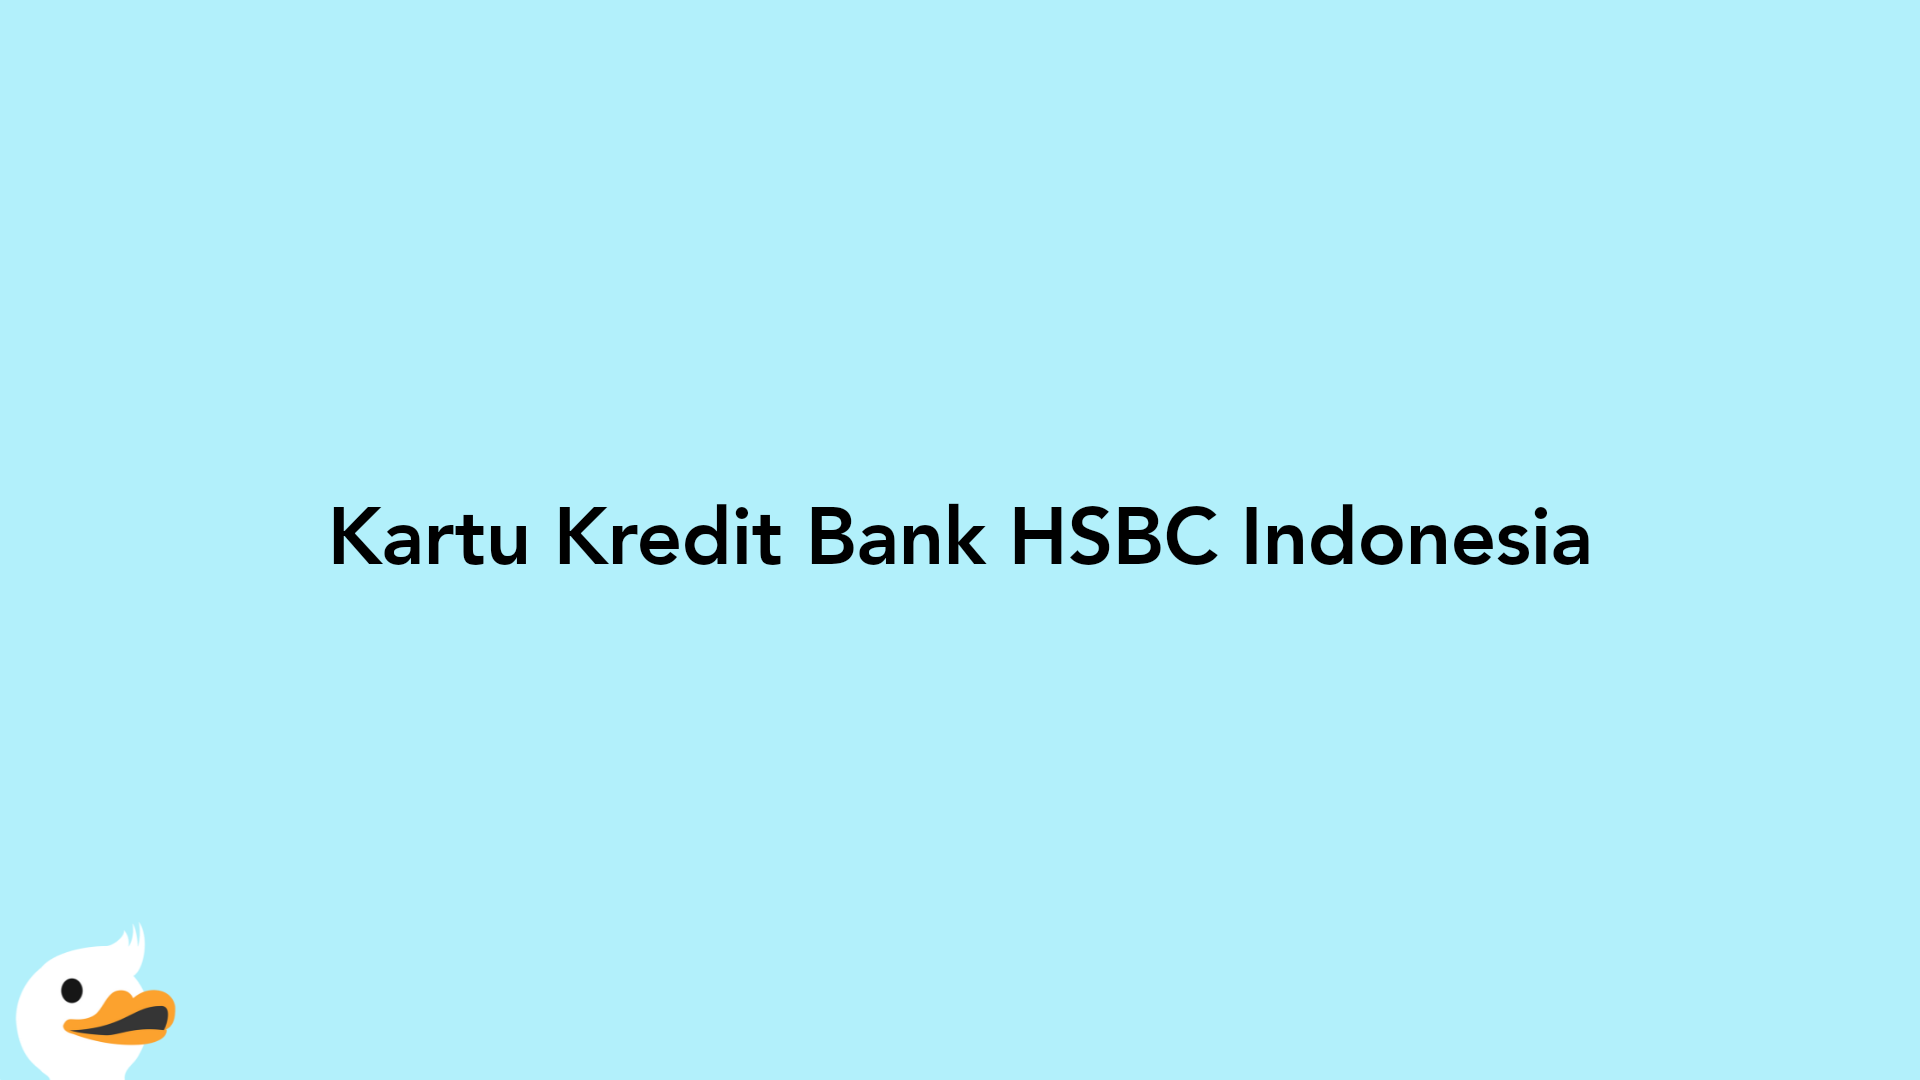 Kartu Kredit Bank HSBC Indonesia